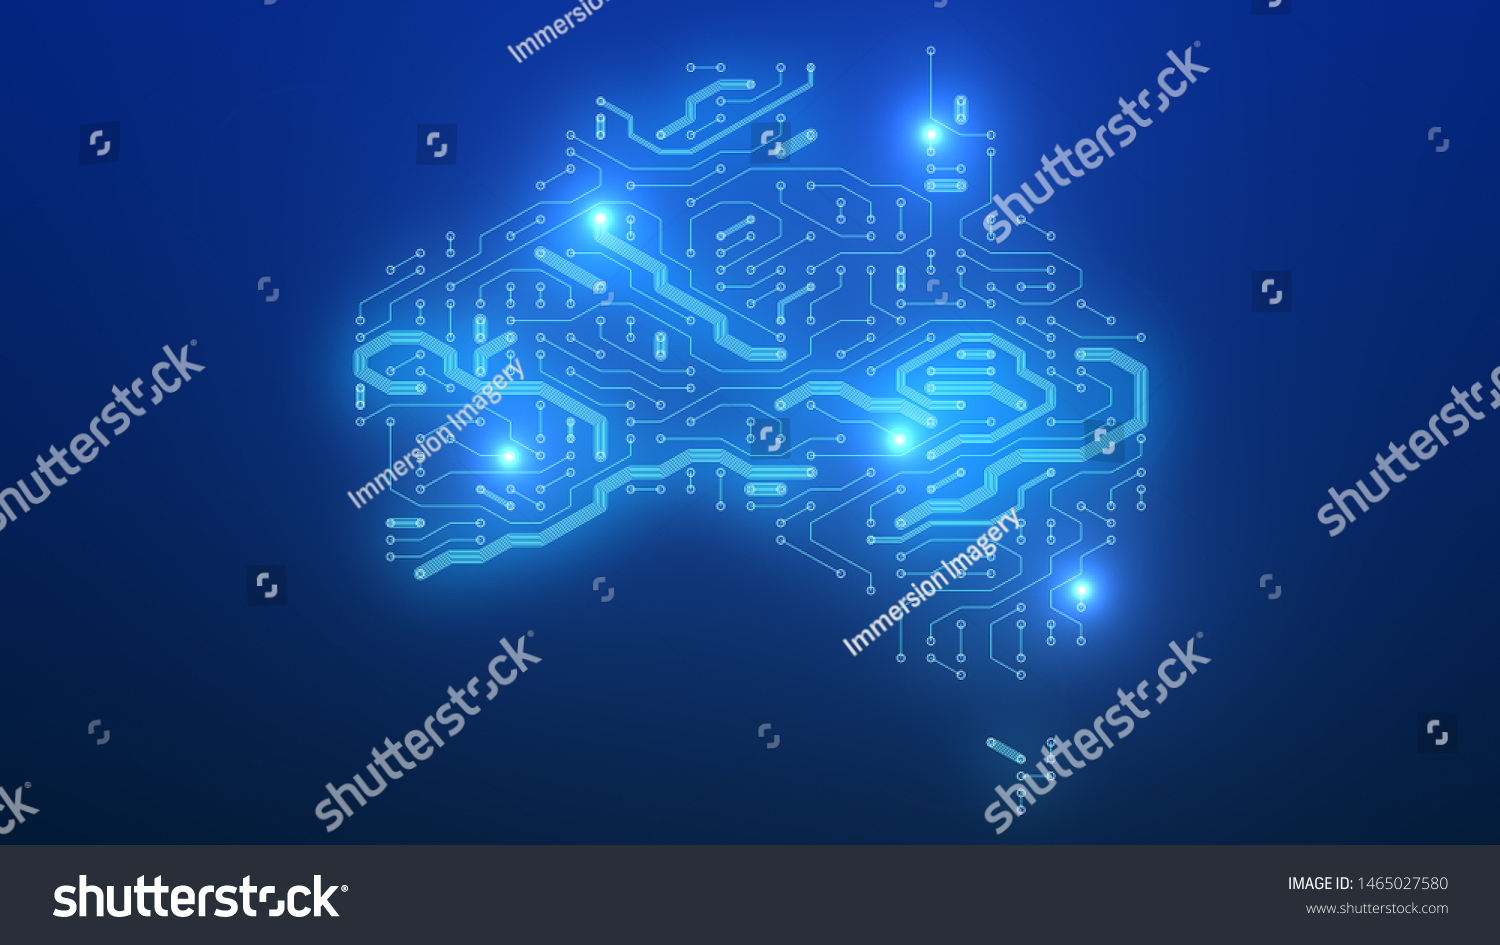 Søgemaskine optimering sten lever Australia Circuit Board Information Technology Bigdata Stock Illustration  1465027580